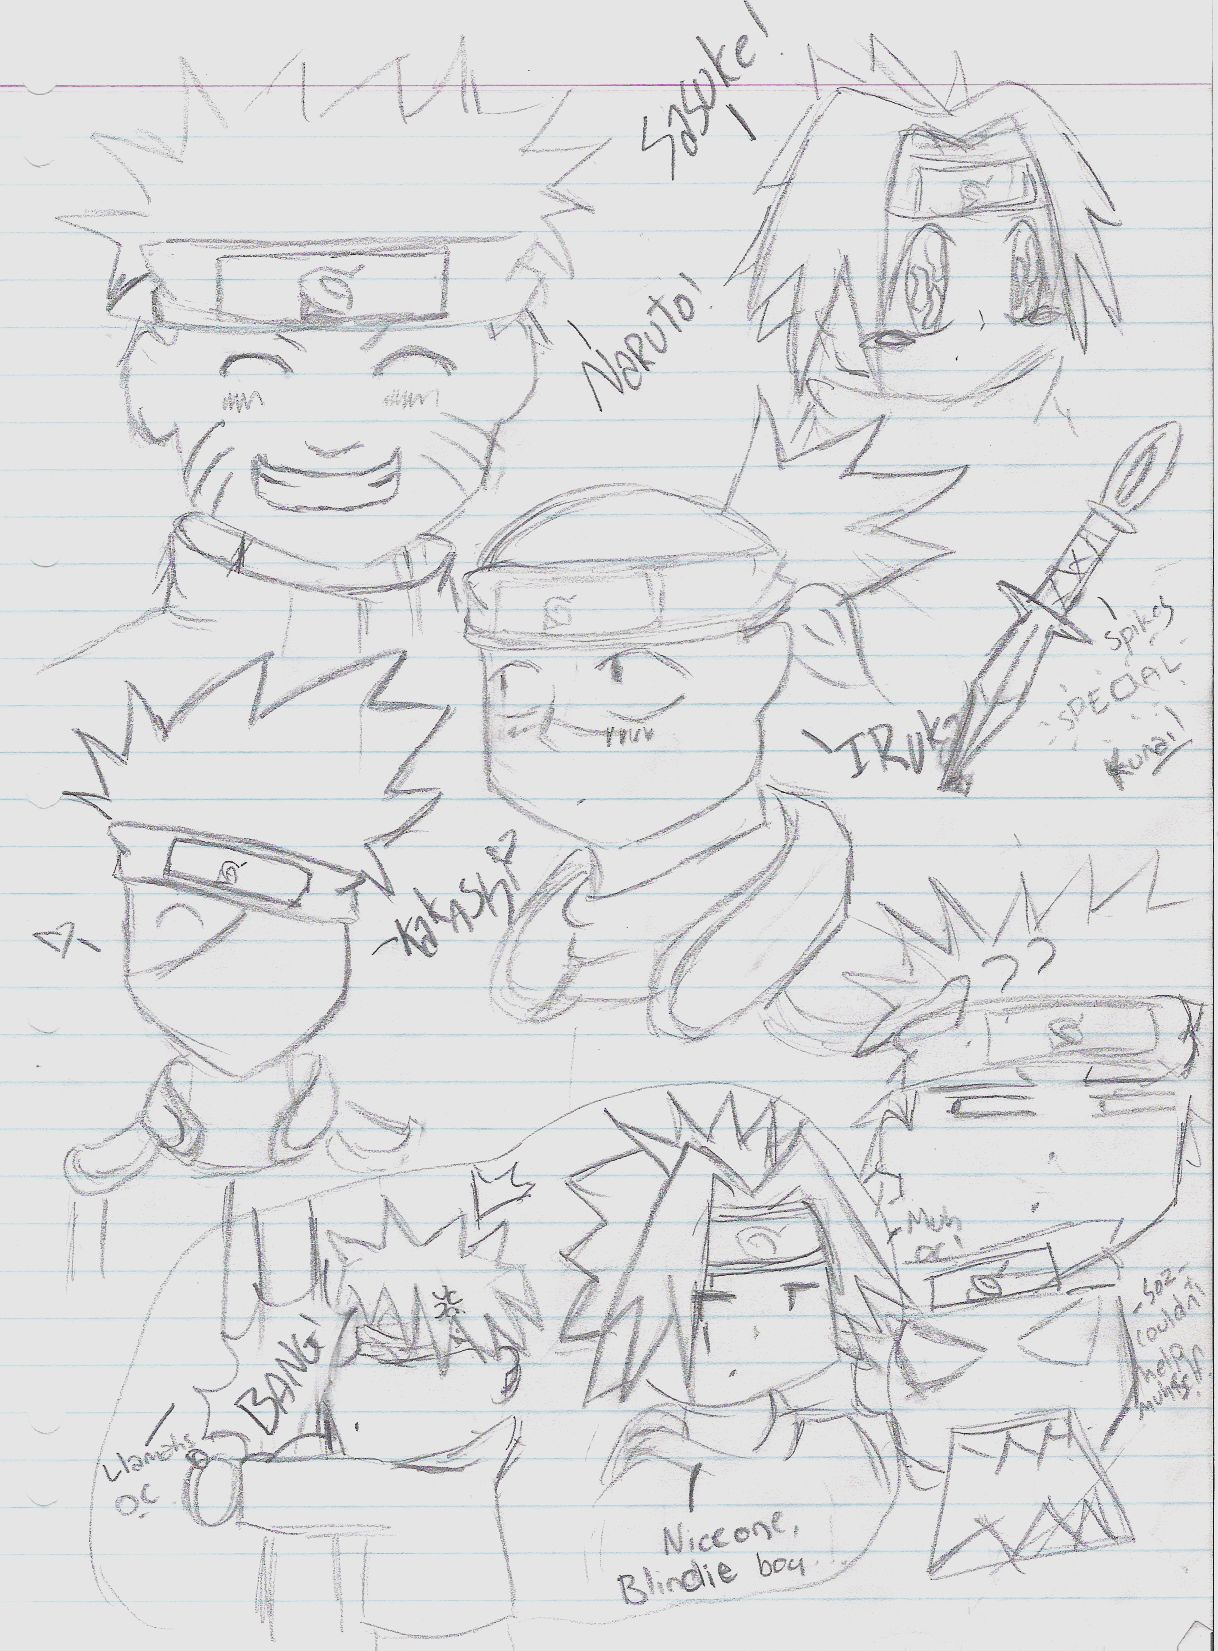 Random Naruto Doodles by Spike_Schinizzle